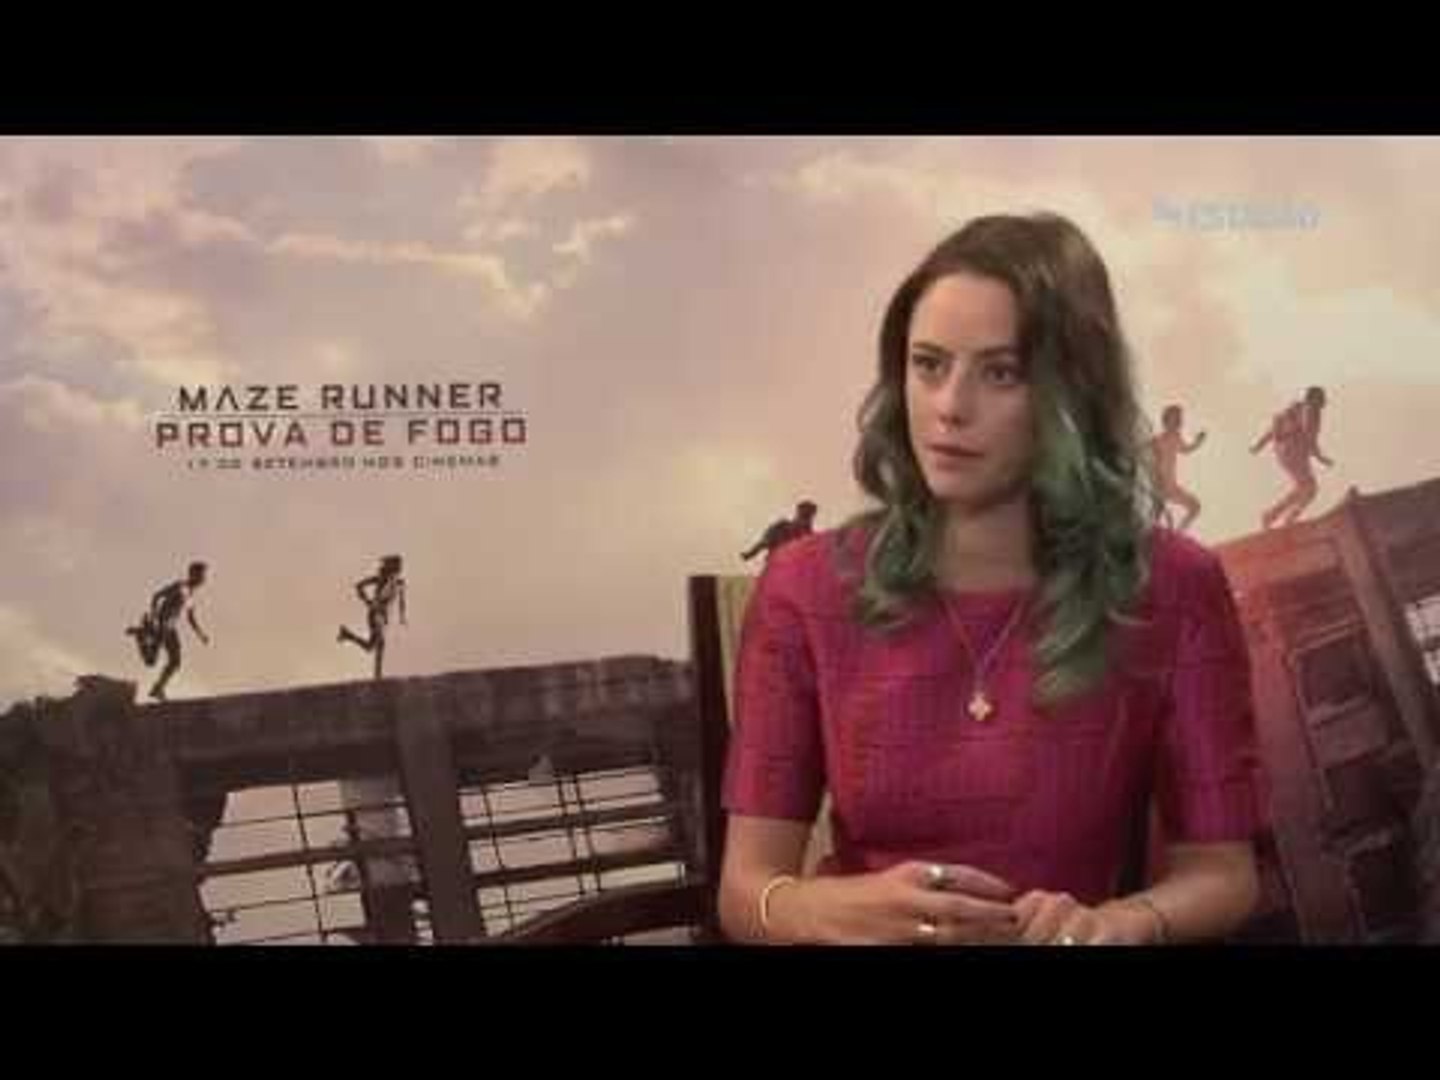 Maze Runner: Prova de Fogo, Segundo Trailer Legendado